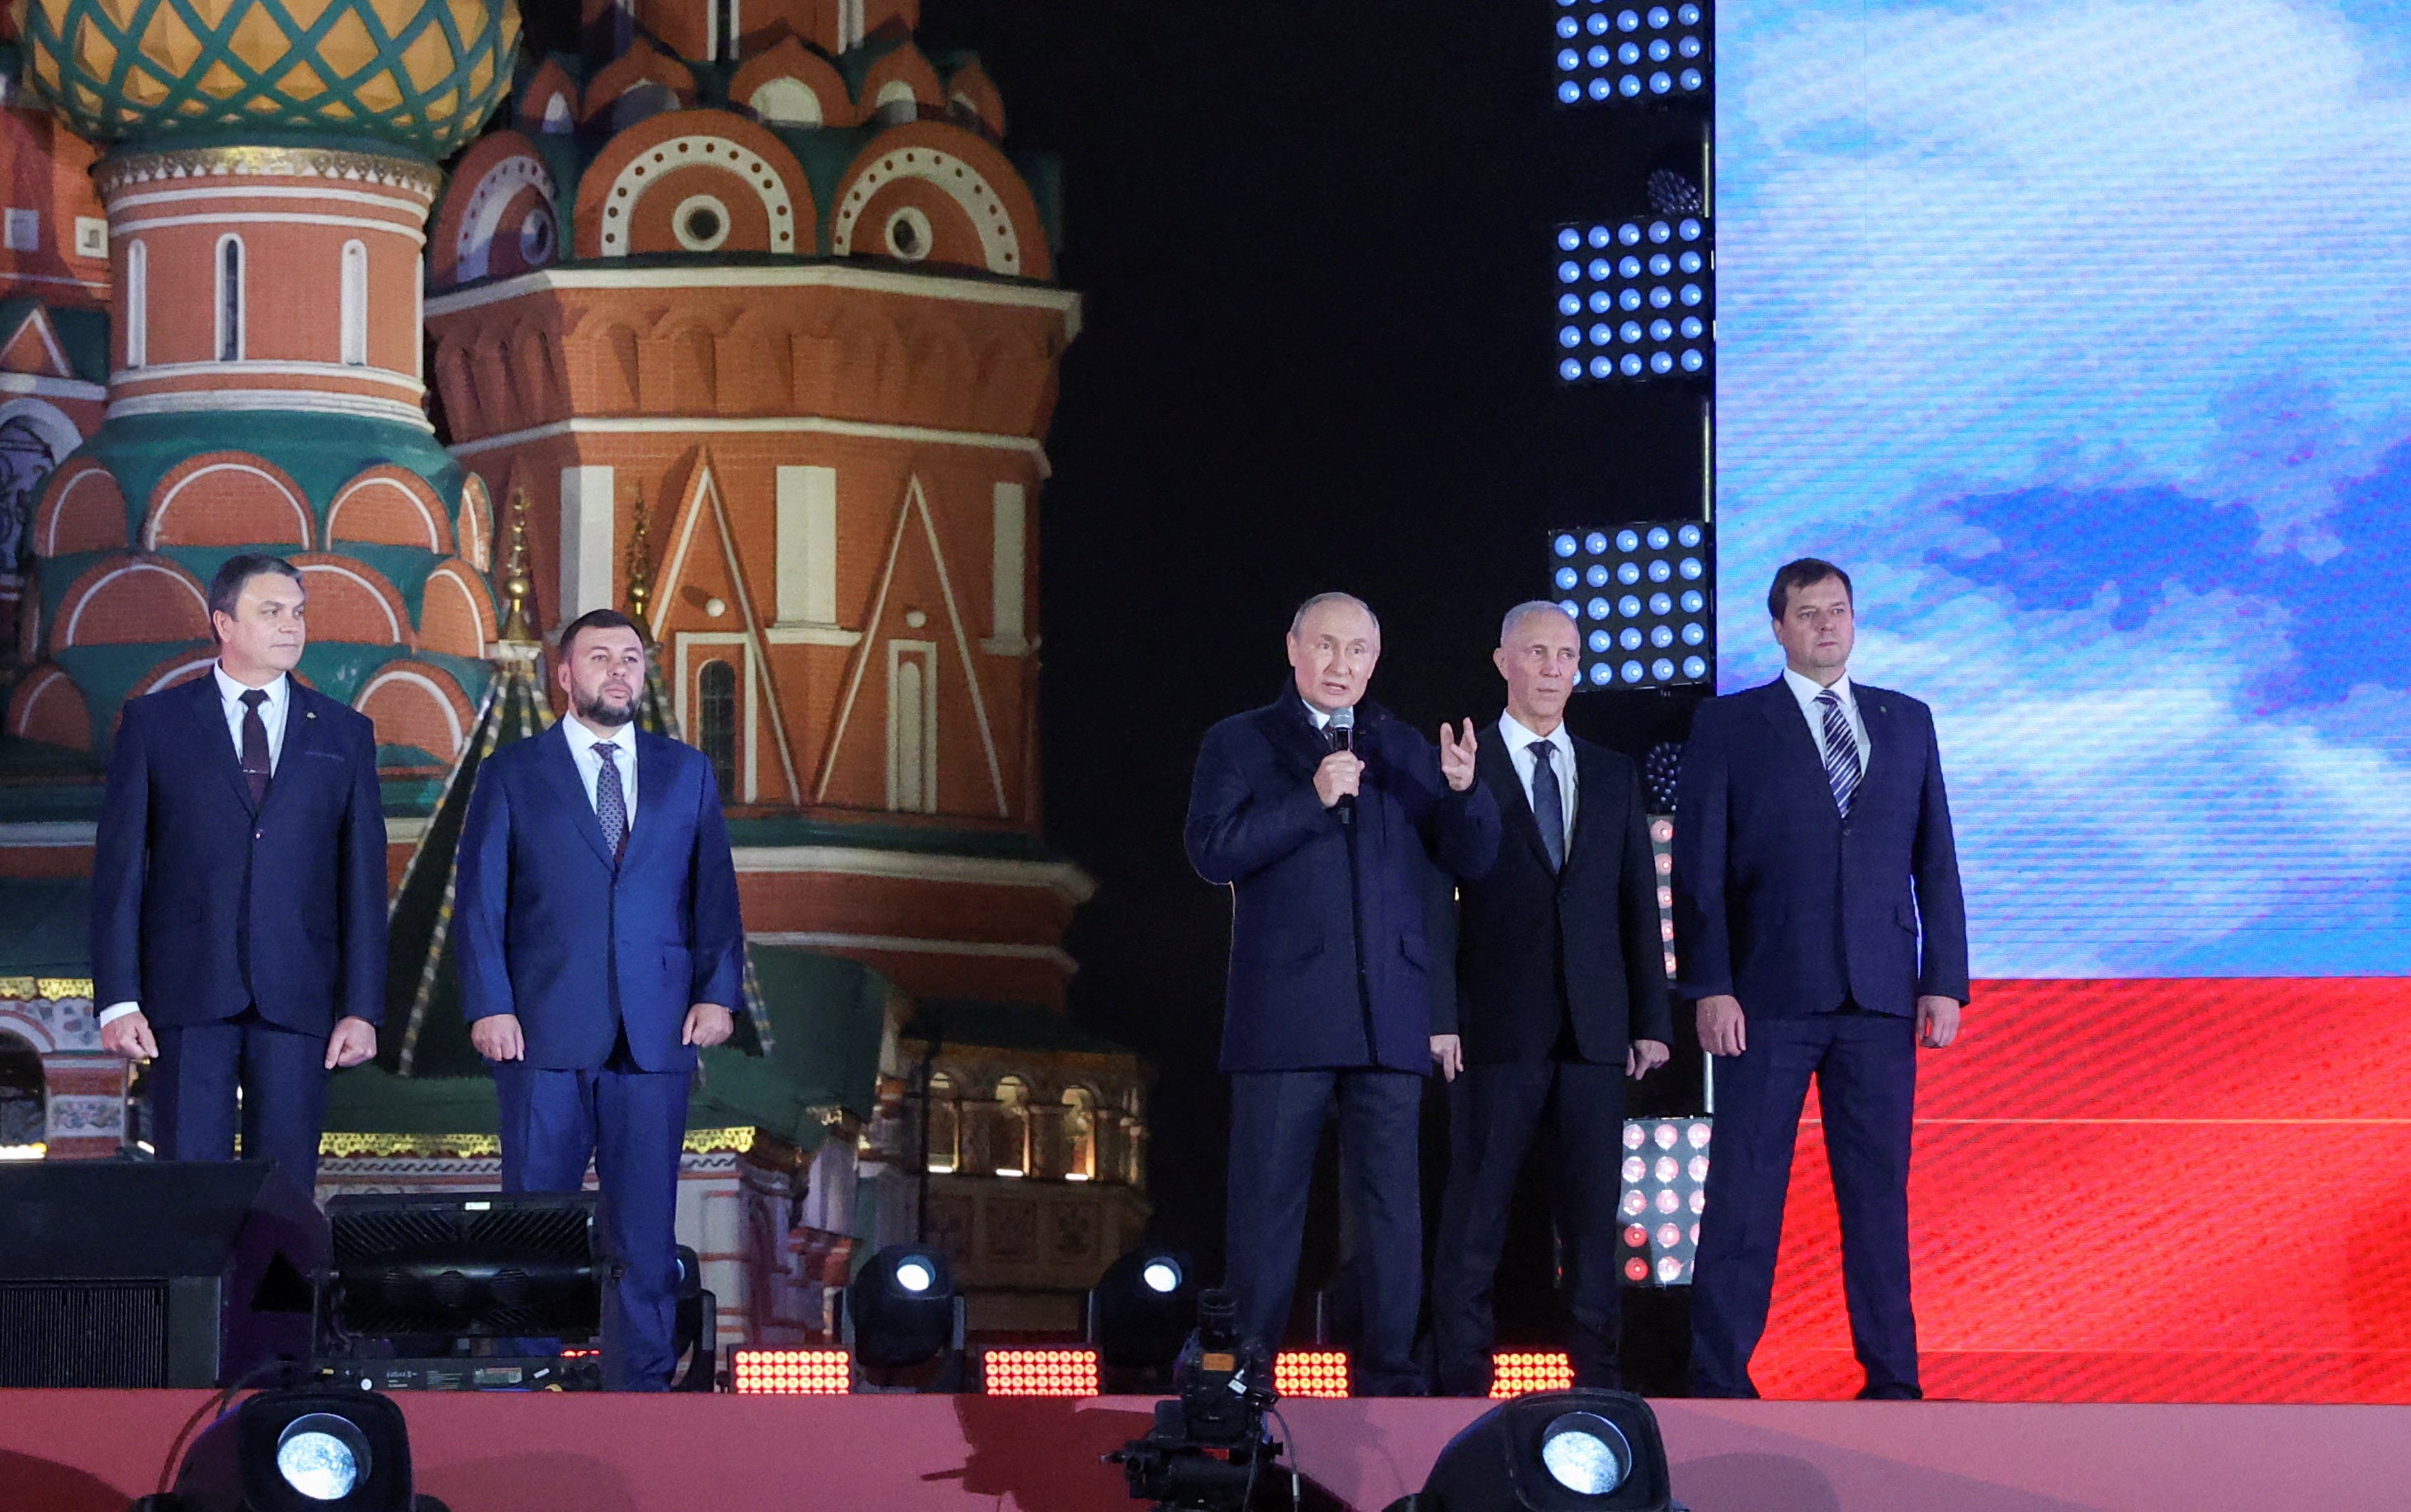 Vladimir Putin with Denis Pushilin, Leonid Pasechnik, Vladimir Saldo and Yevgeny Balitsky, the Russian-installed leaders in Ukraine’s Donetsk, Luhansk, Kherson and Zaporizhzhia regions